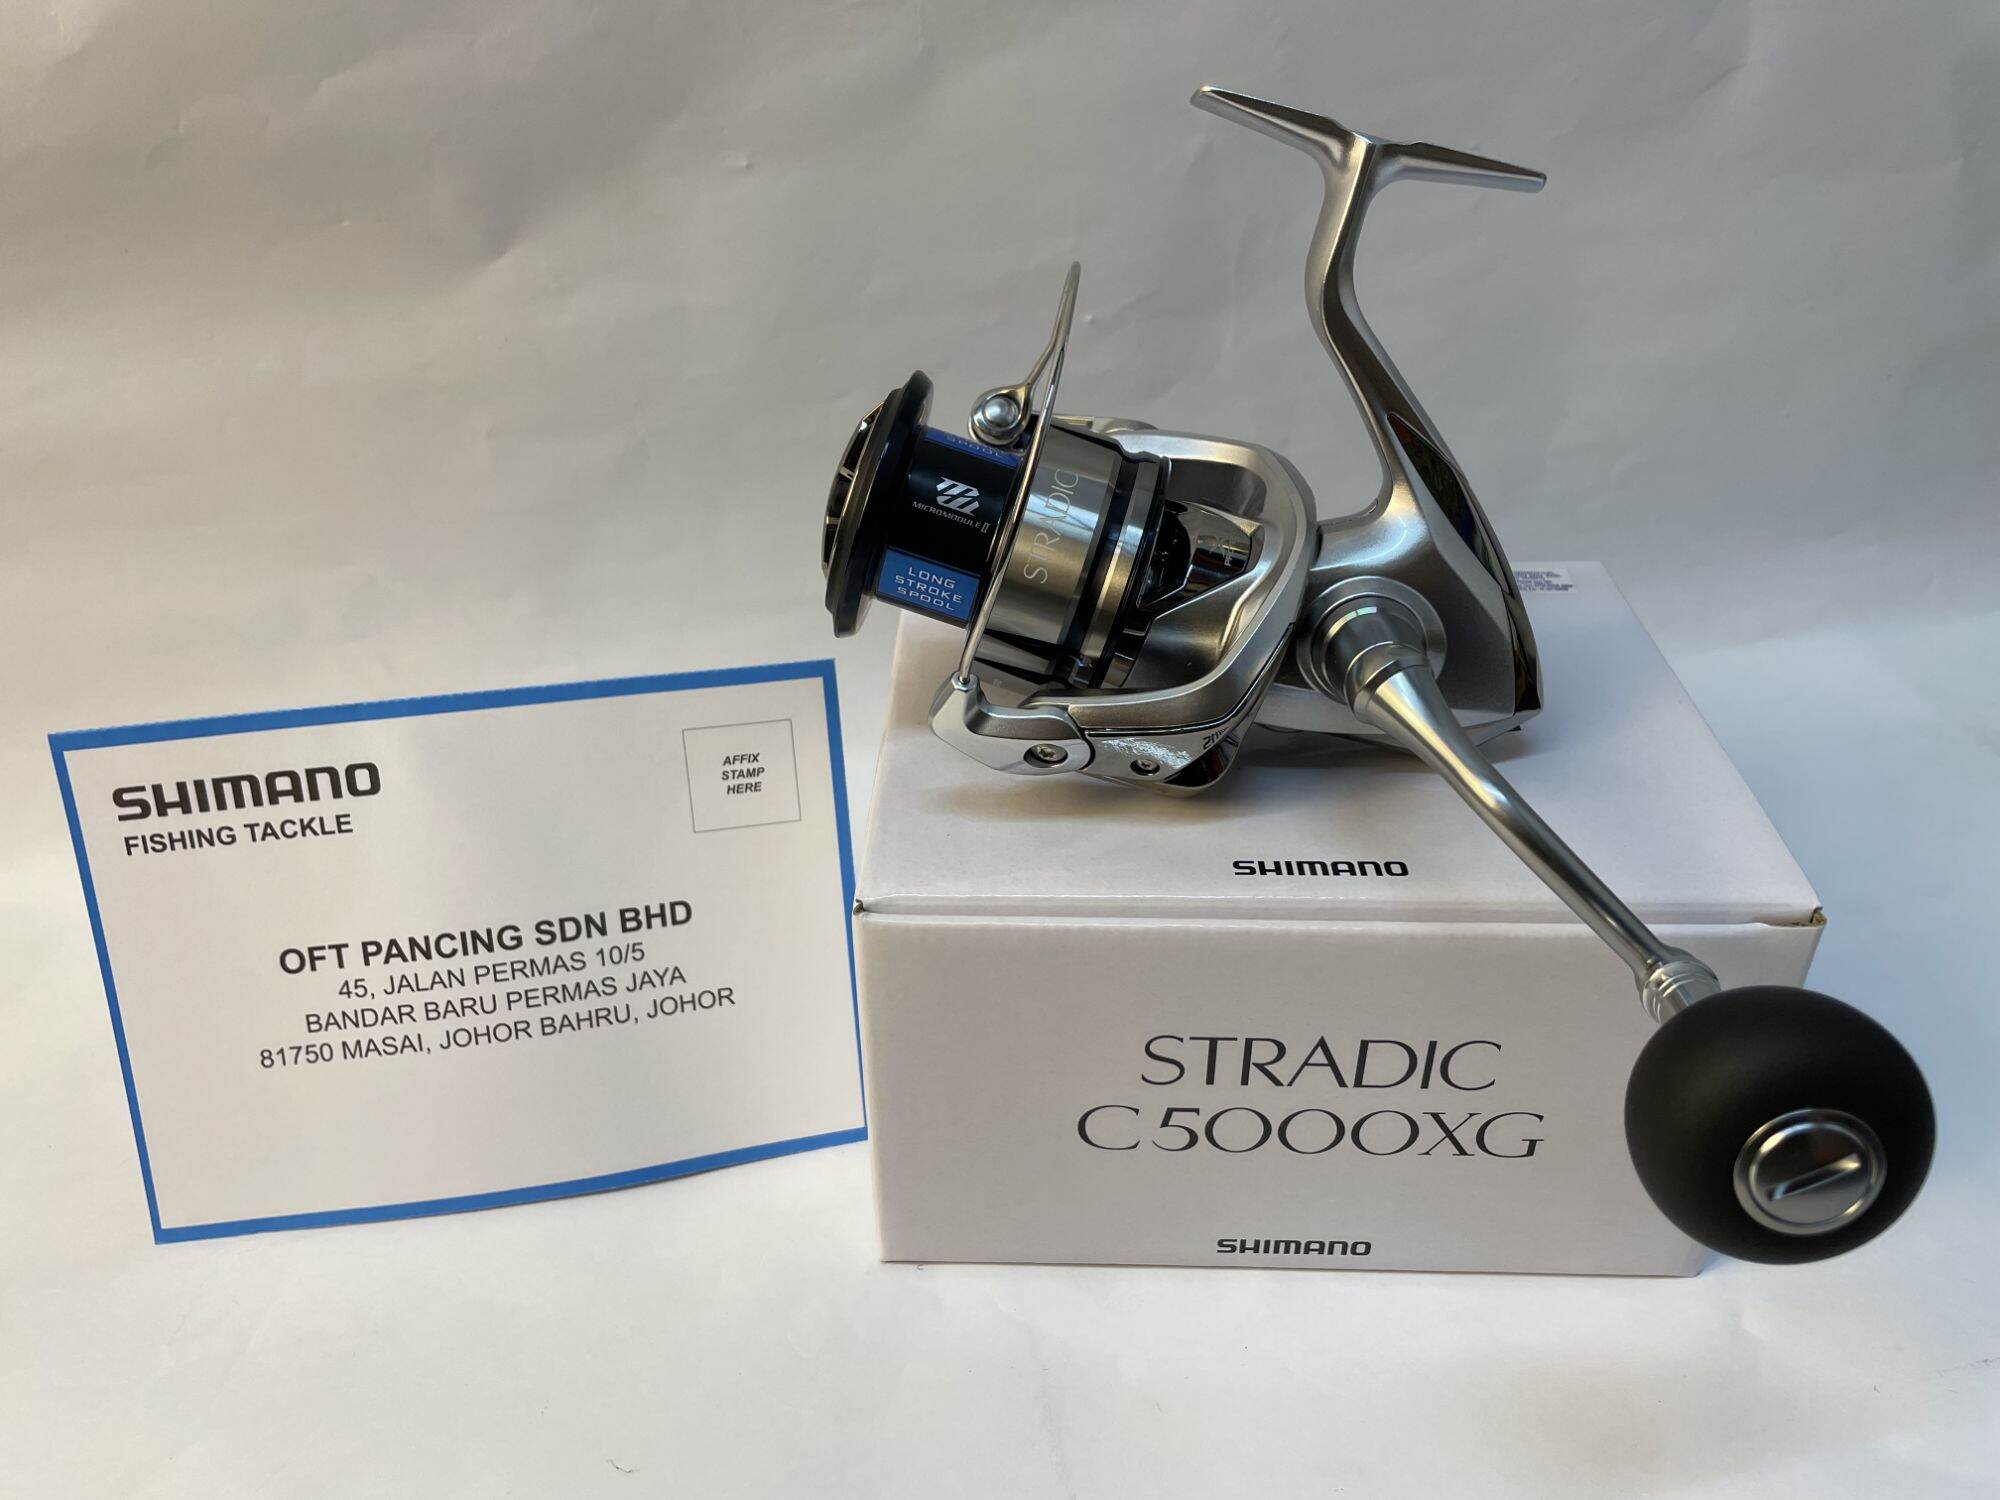 19' STRADIC FL 1000-C5000XG SHIMANO REEL WITH 1 YEAR WARRANTY